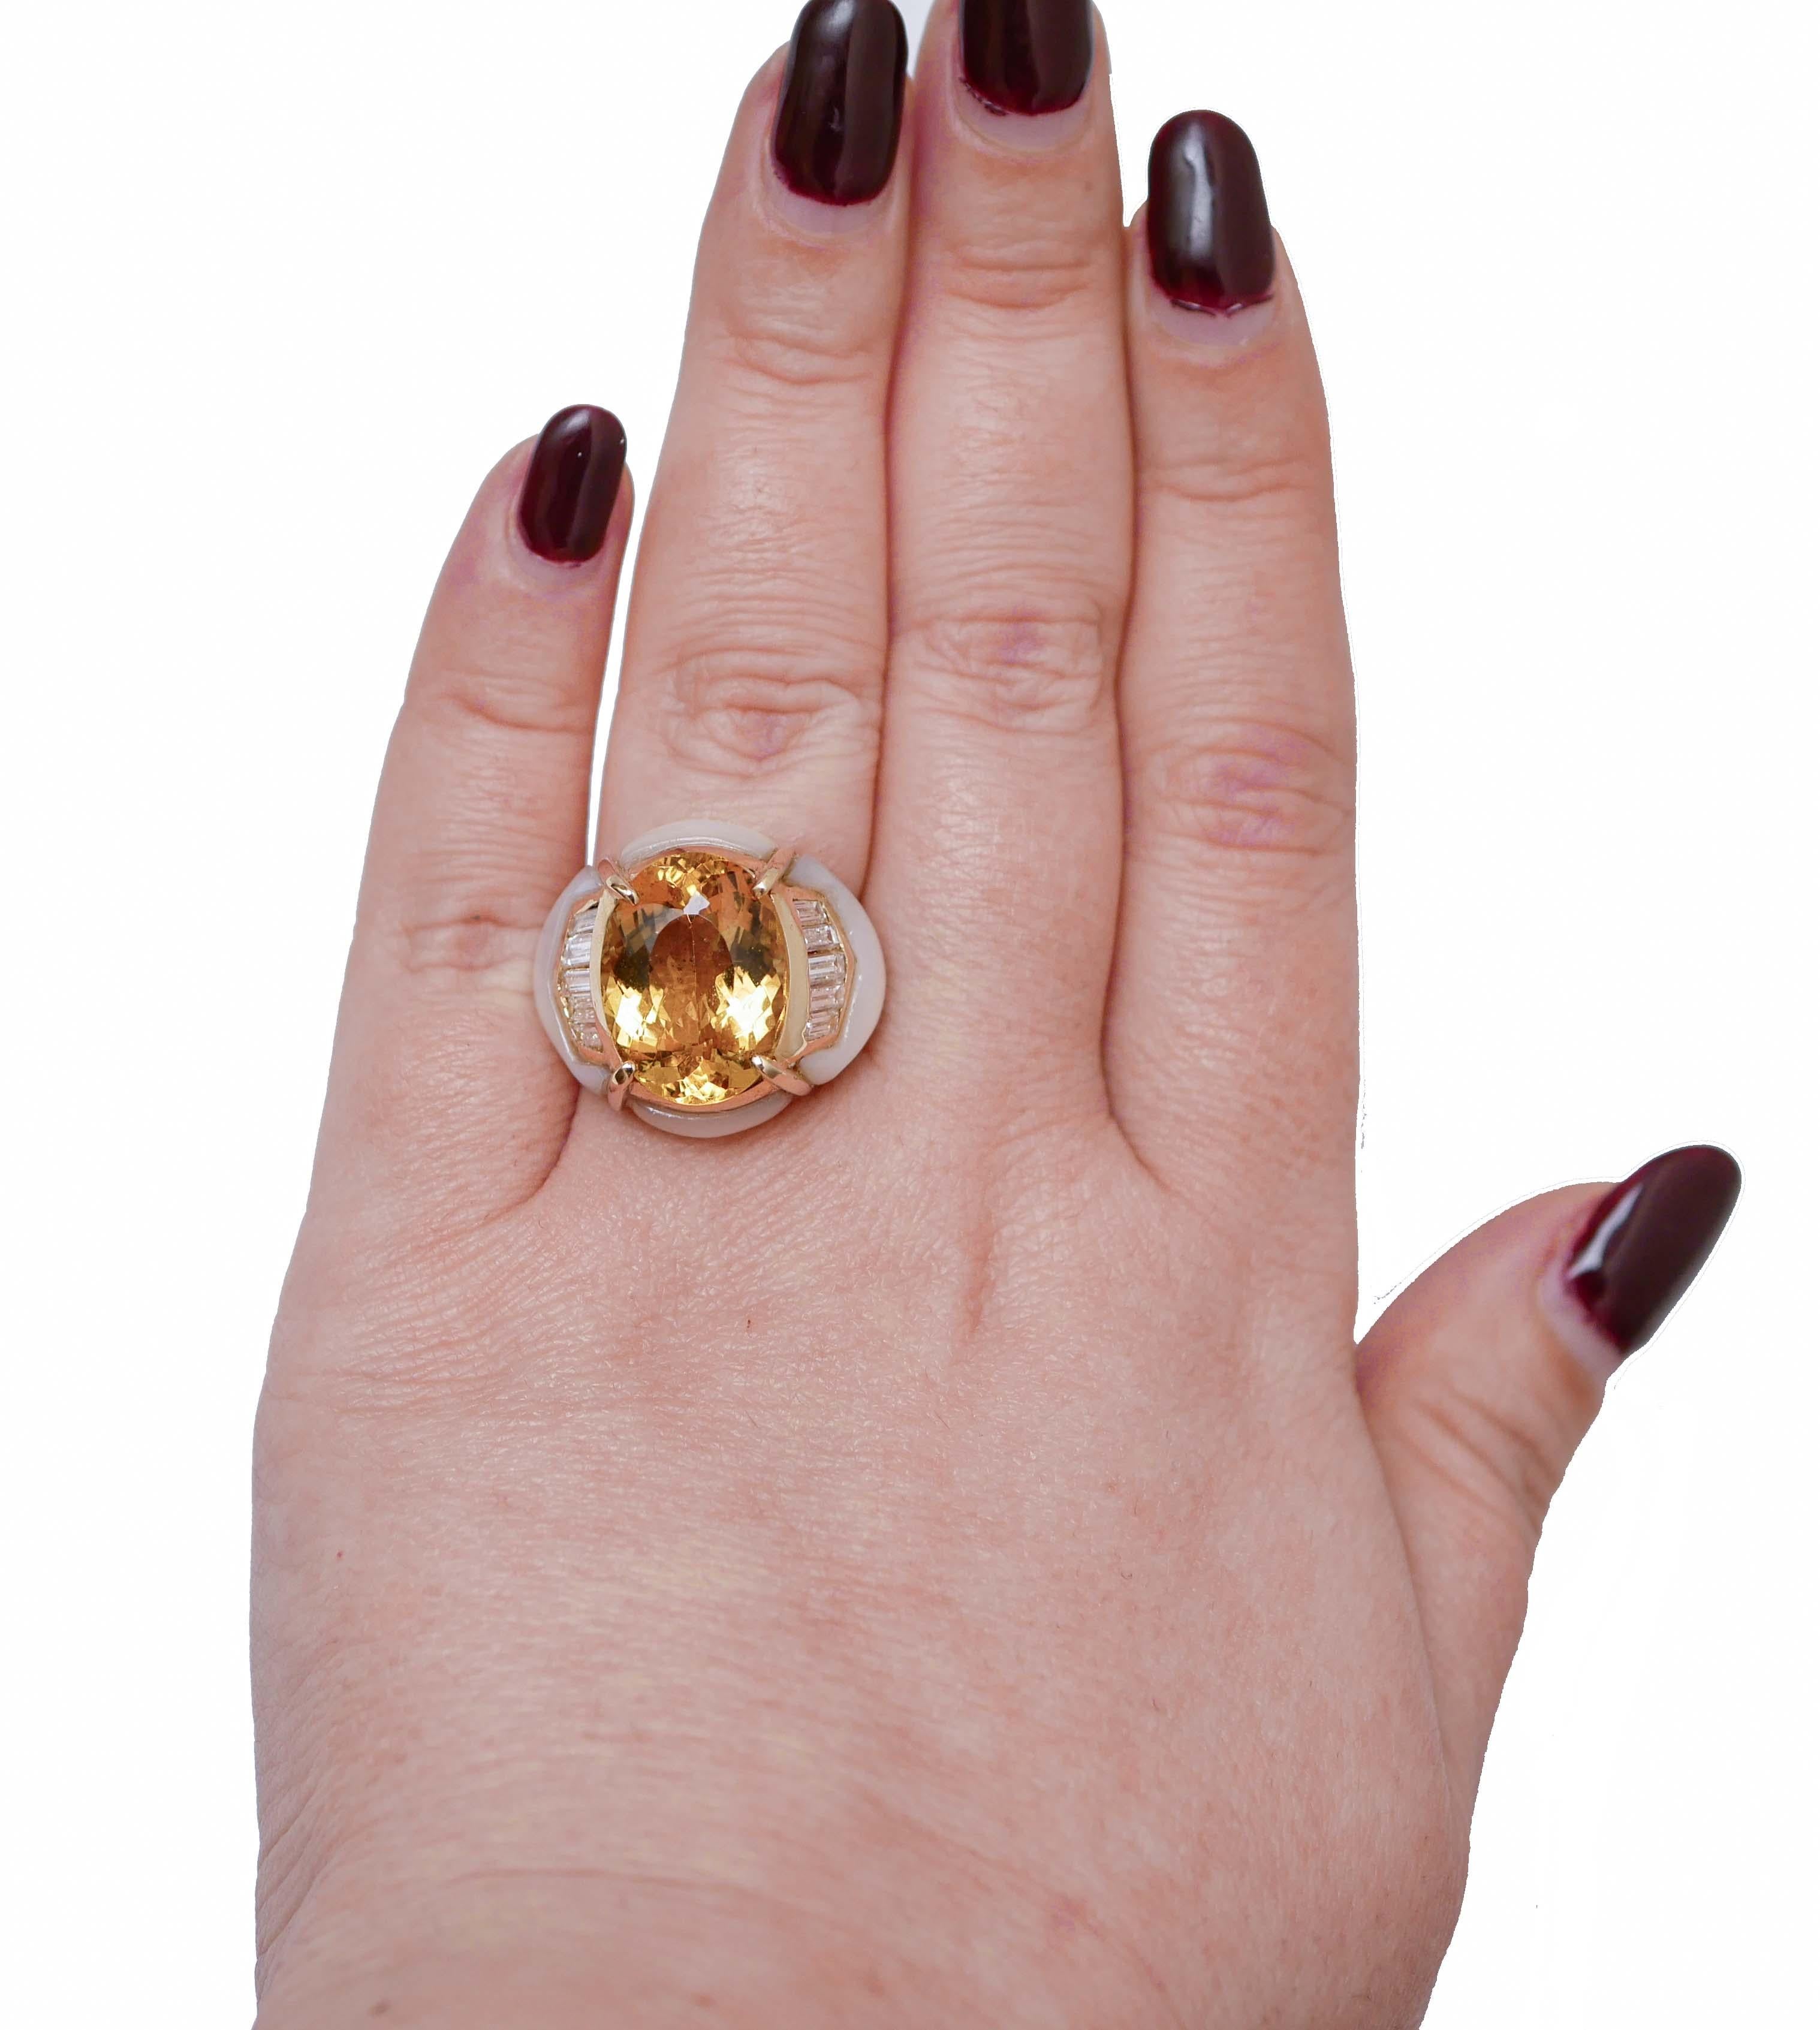 Baguette Cut Heliodorus, Diamonds, White Stones, 18 Karat Rose Gold Ring. For Sale